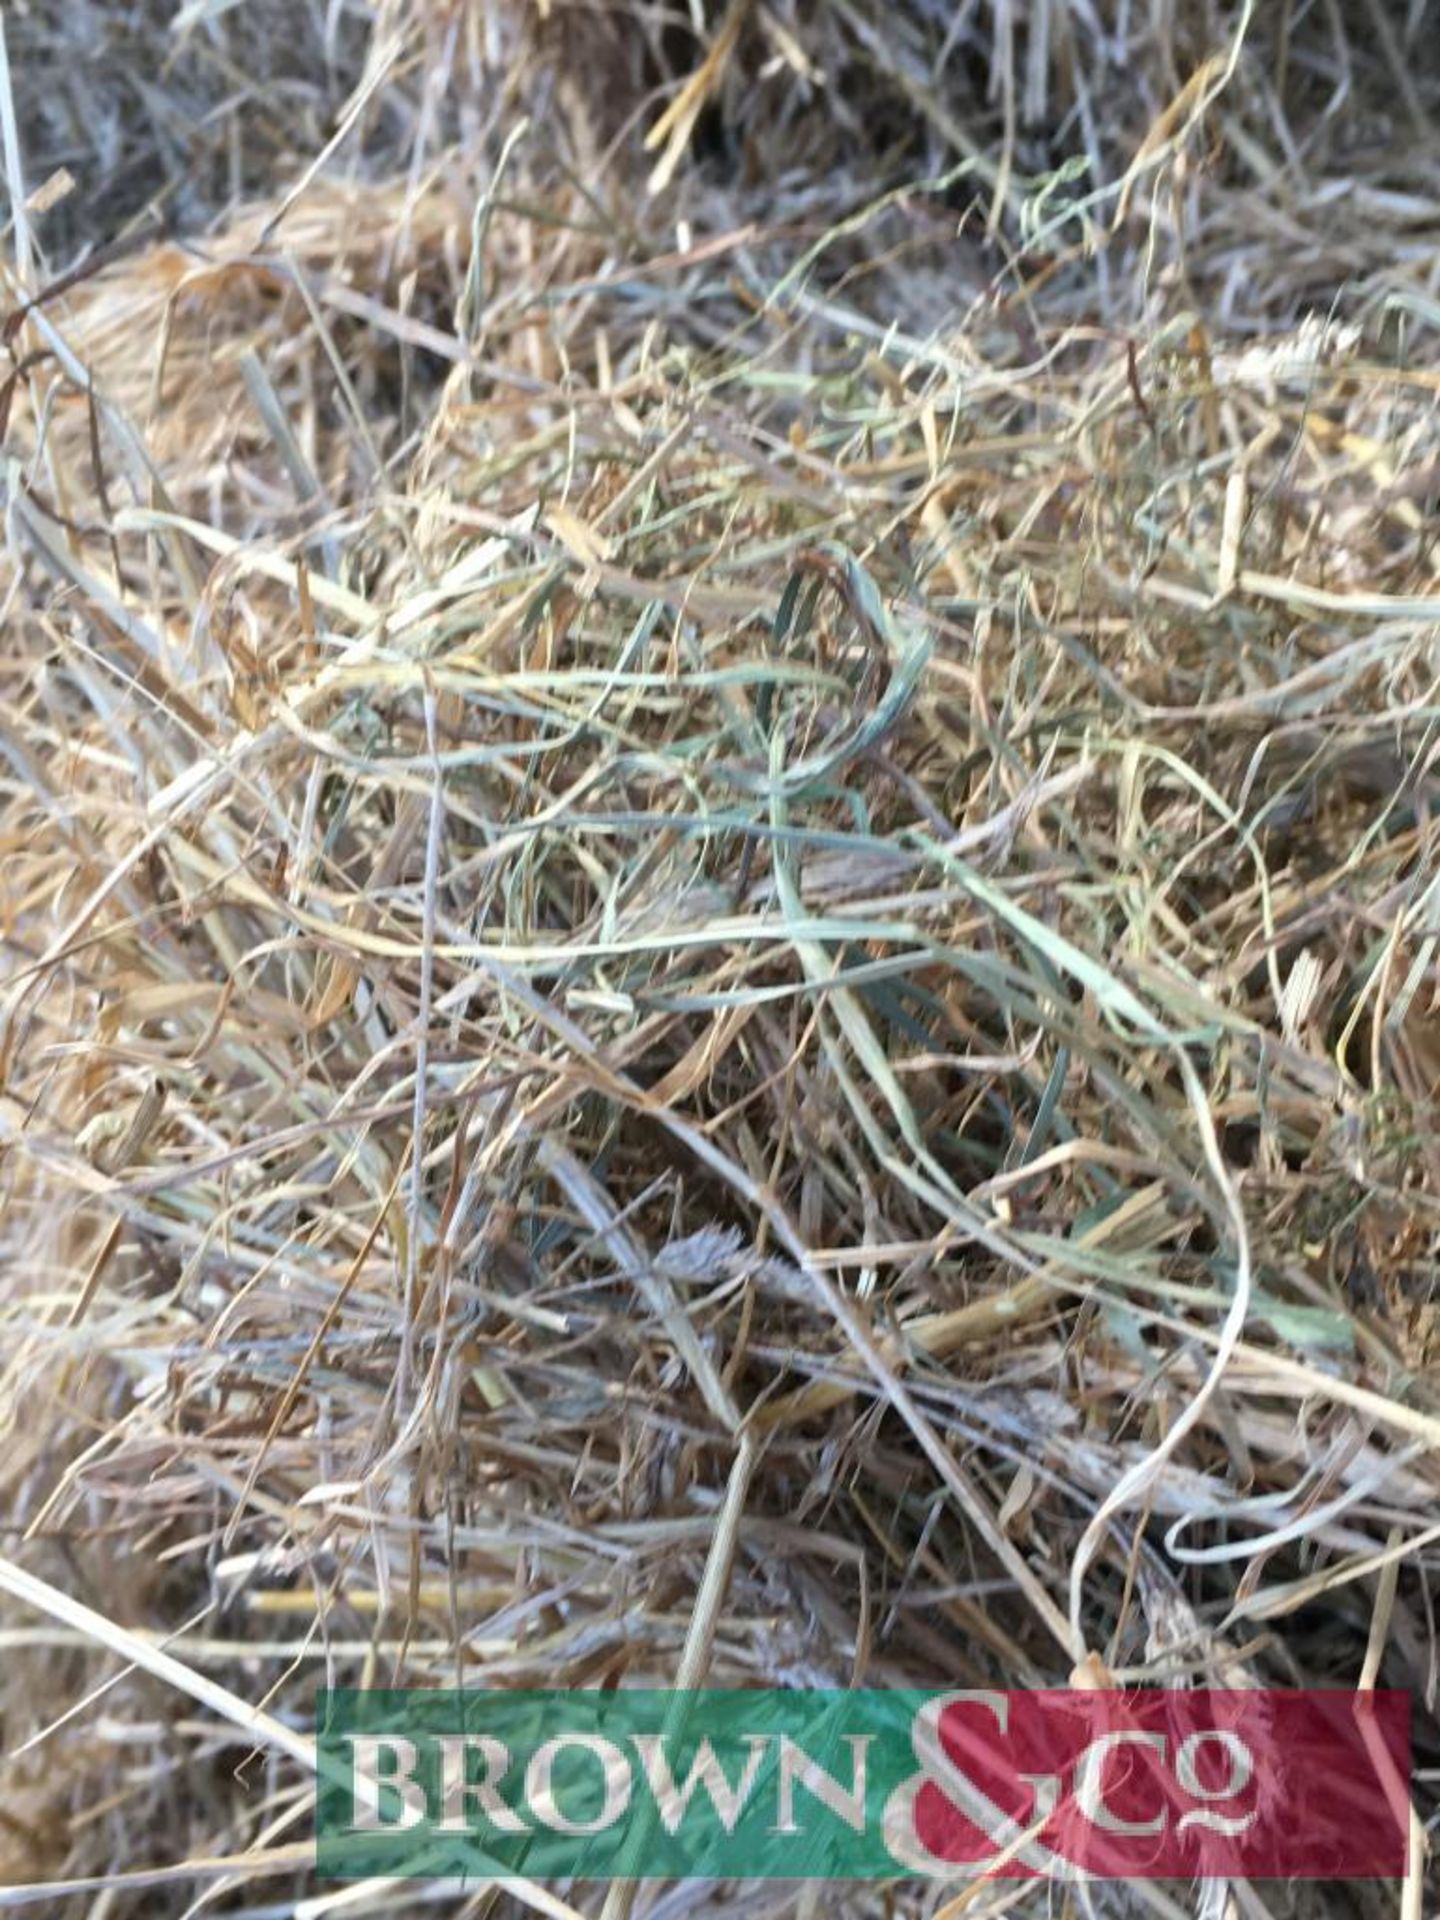 270 No. Mini Hesston Bales of 2019 Cut Hay - Image 5 of 6